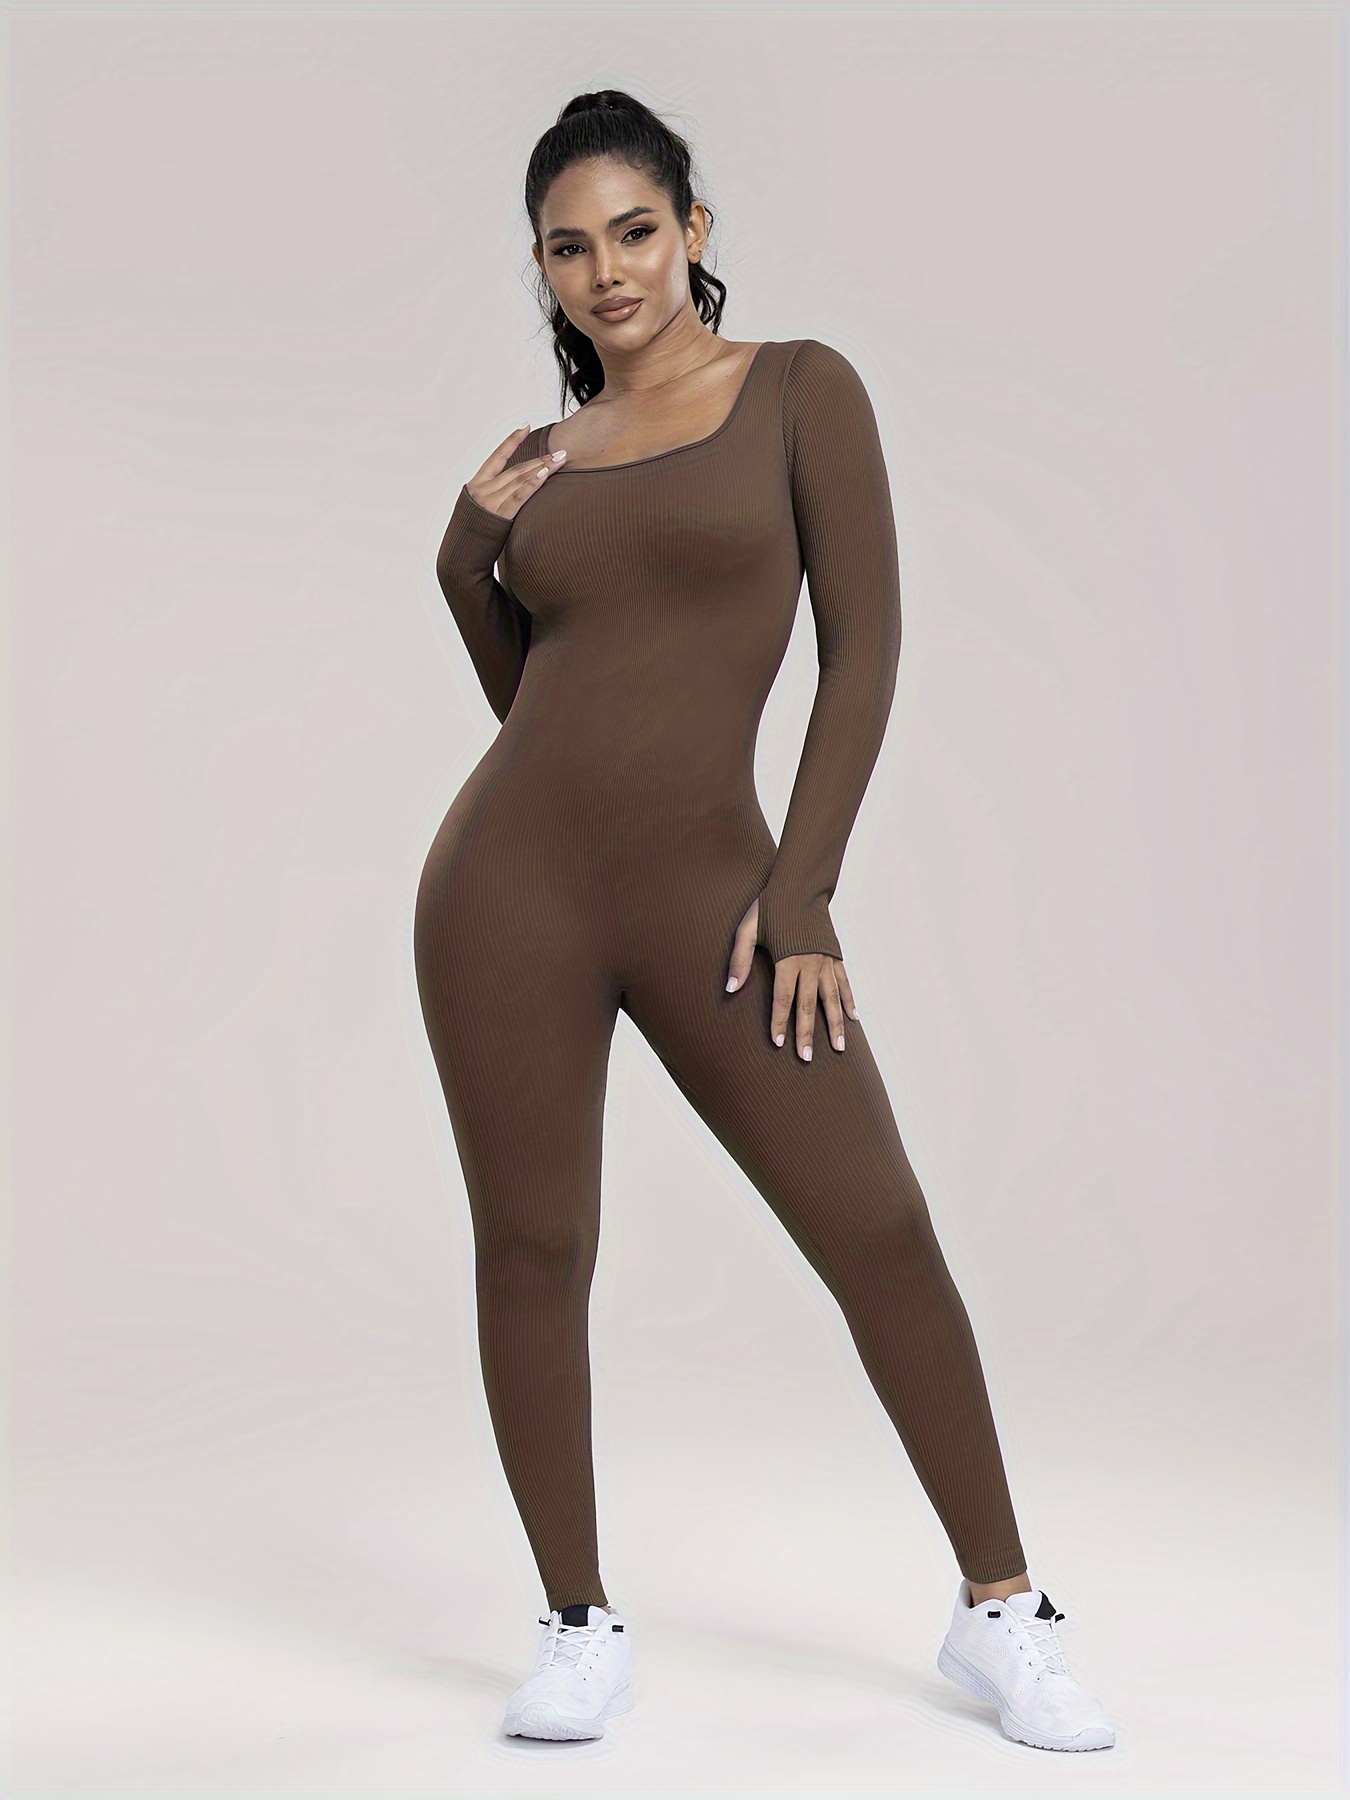 Womens Ribbed Yoga Bodysuit Long Sleeve, Skin Tight, Chreisure Sports Yoga  Apparel From Kaiser01, $44.49